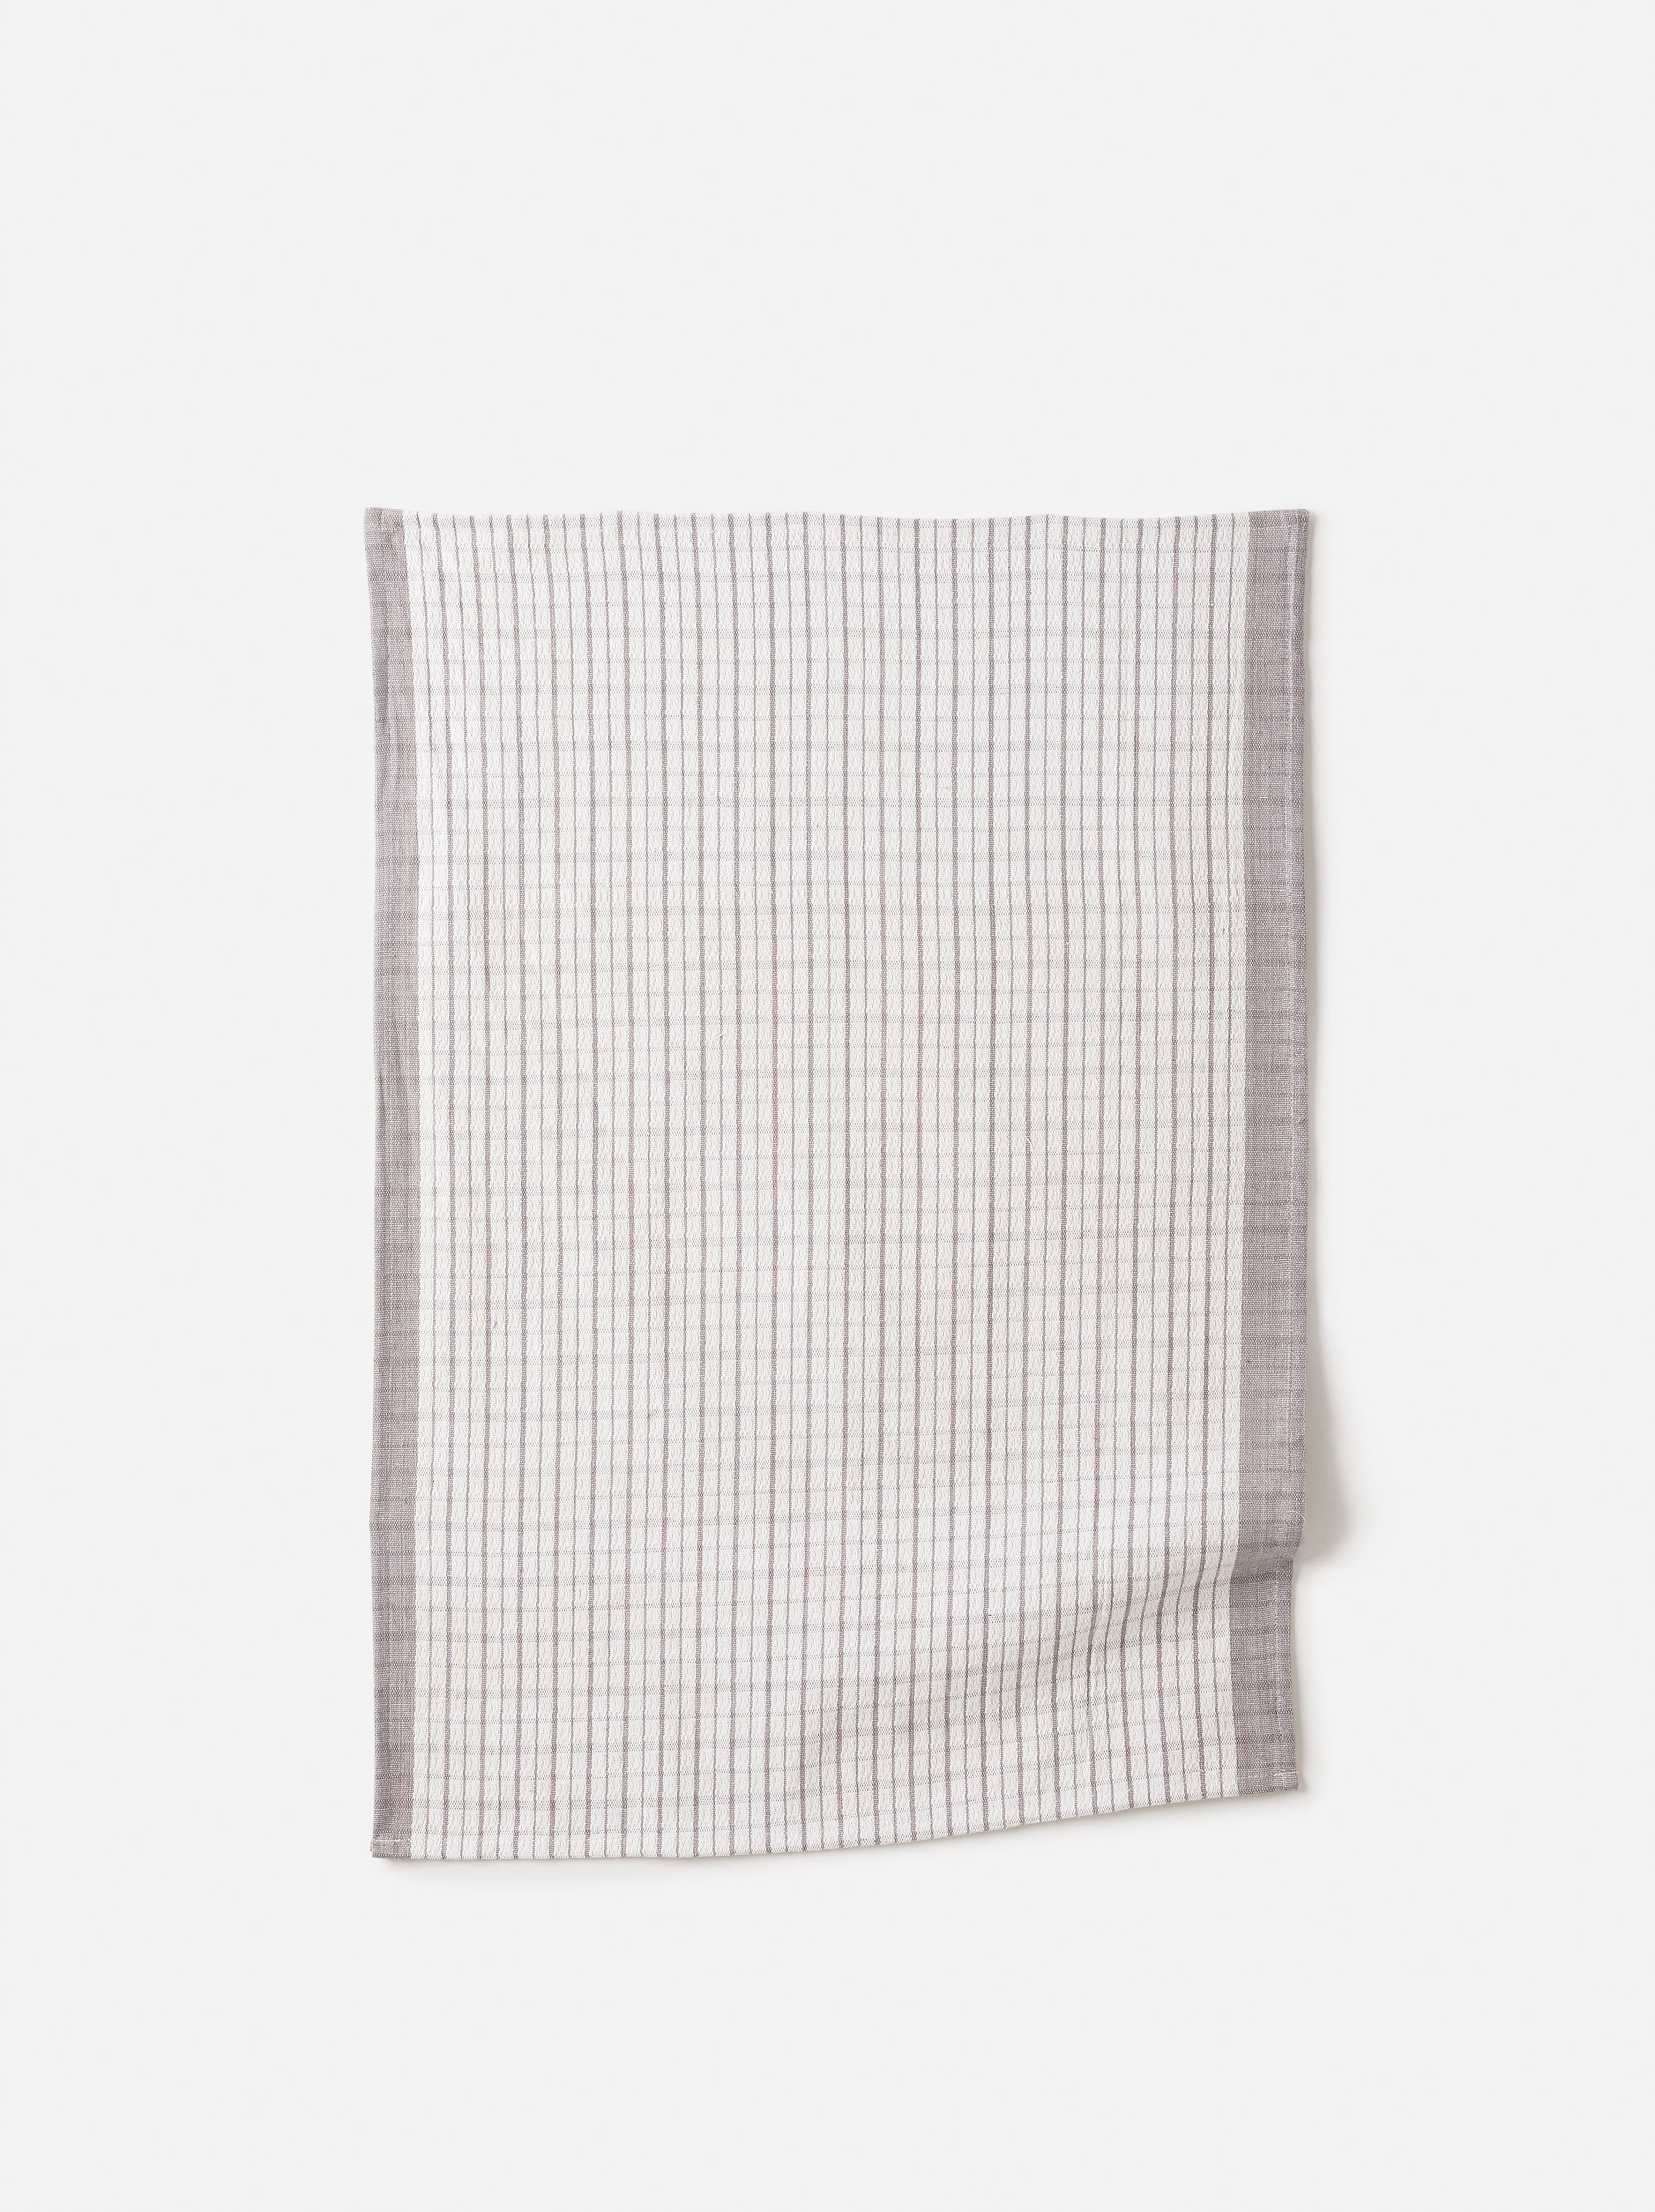 Bergamo Embroidered Tea Towel Set of 2 /, 100% Cotton, Size 19x27 | April Cornell